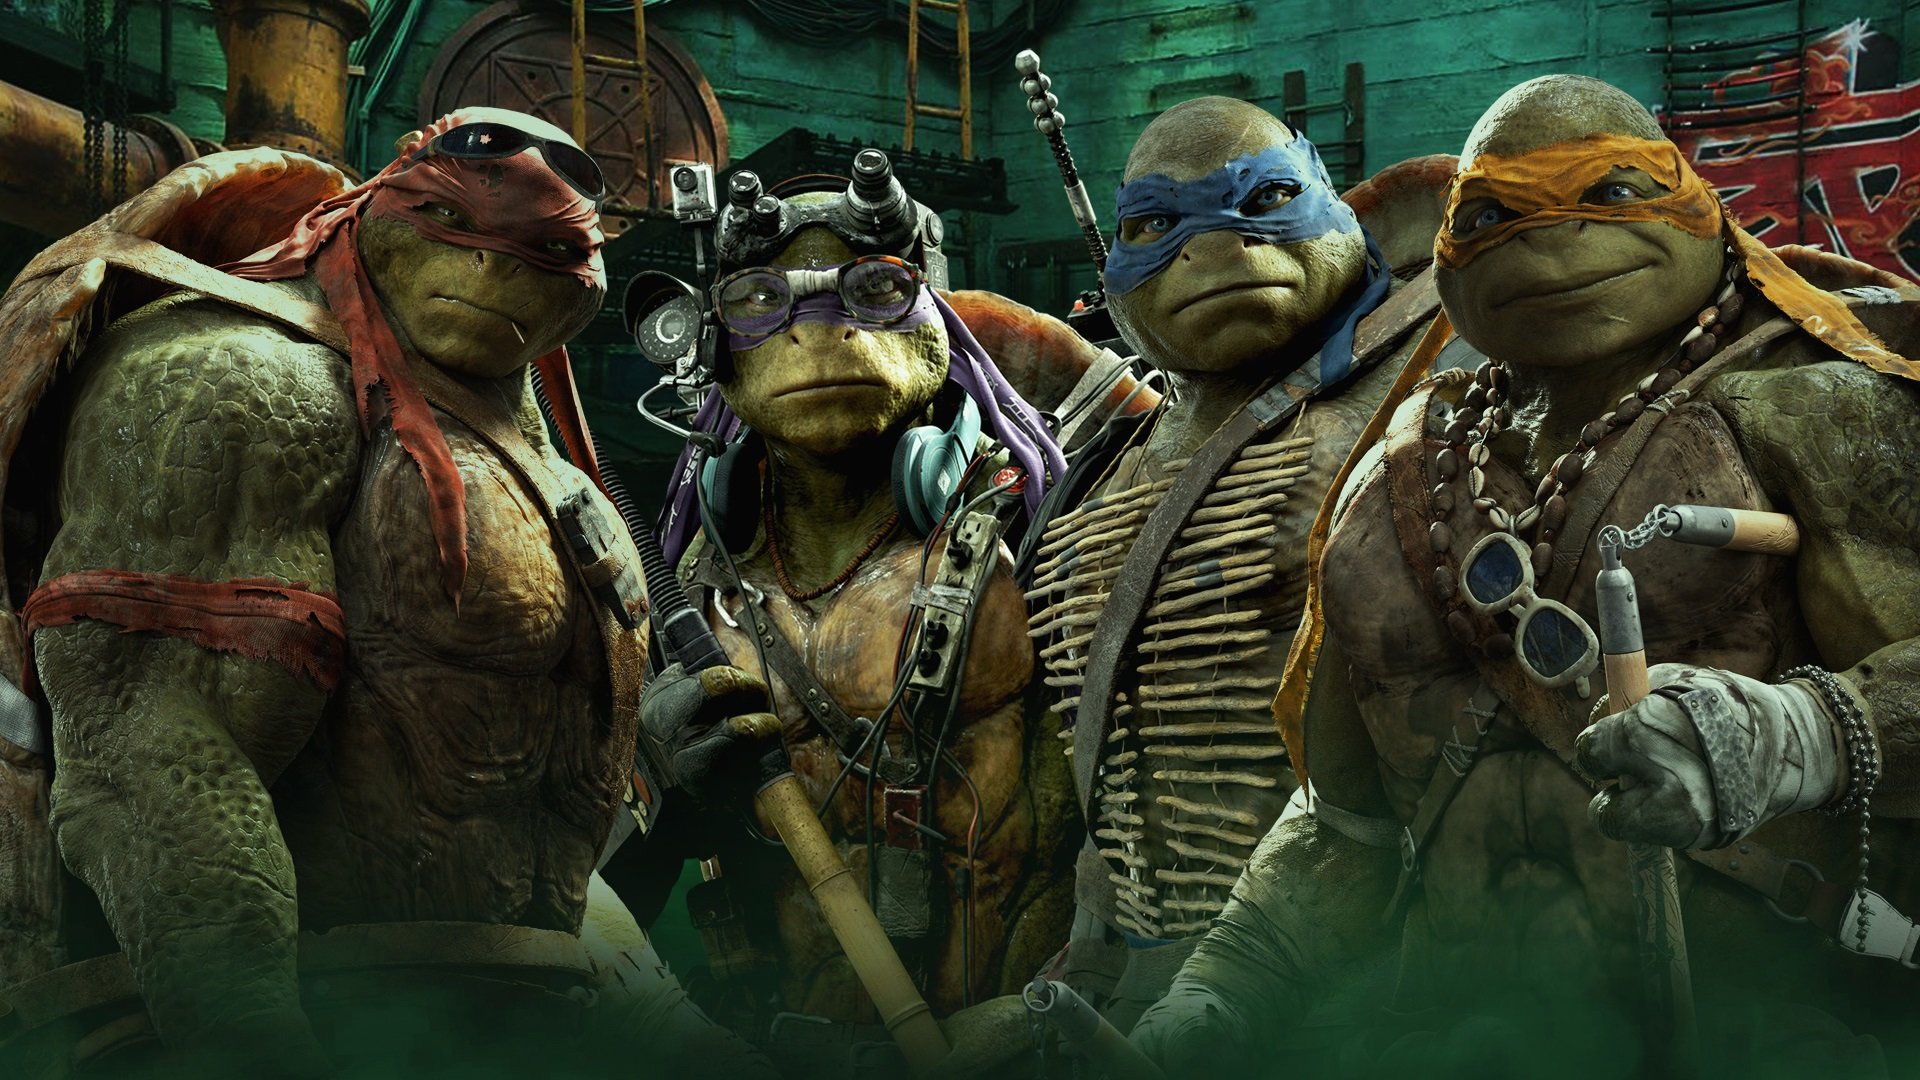 Free download Teenage Mutant Ninja Turtles (2014) TMNT movie wallpaper ID:234207 full hd 1080p for desktop